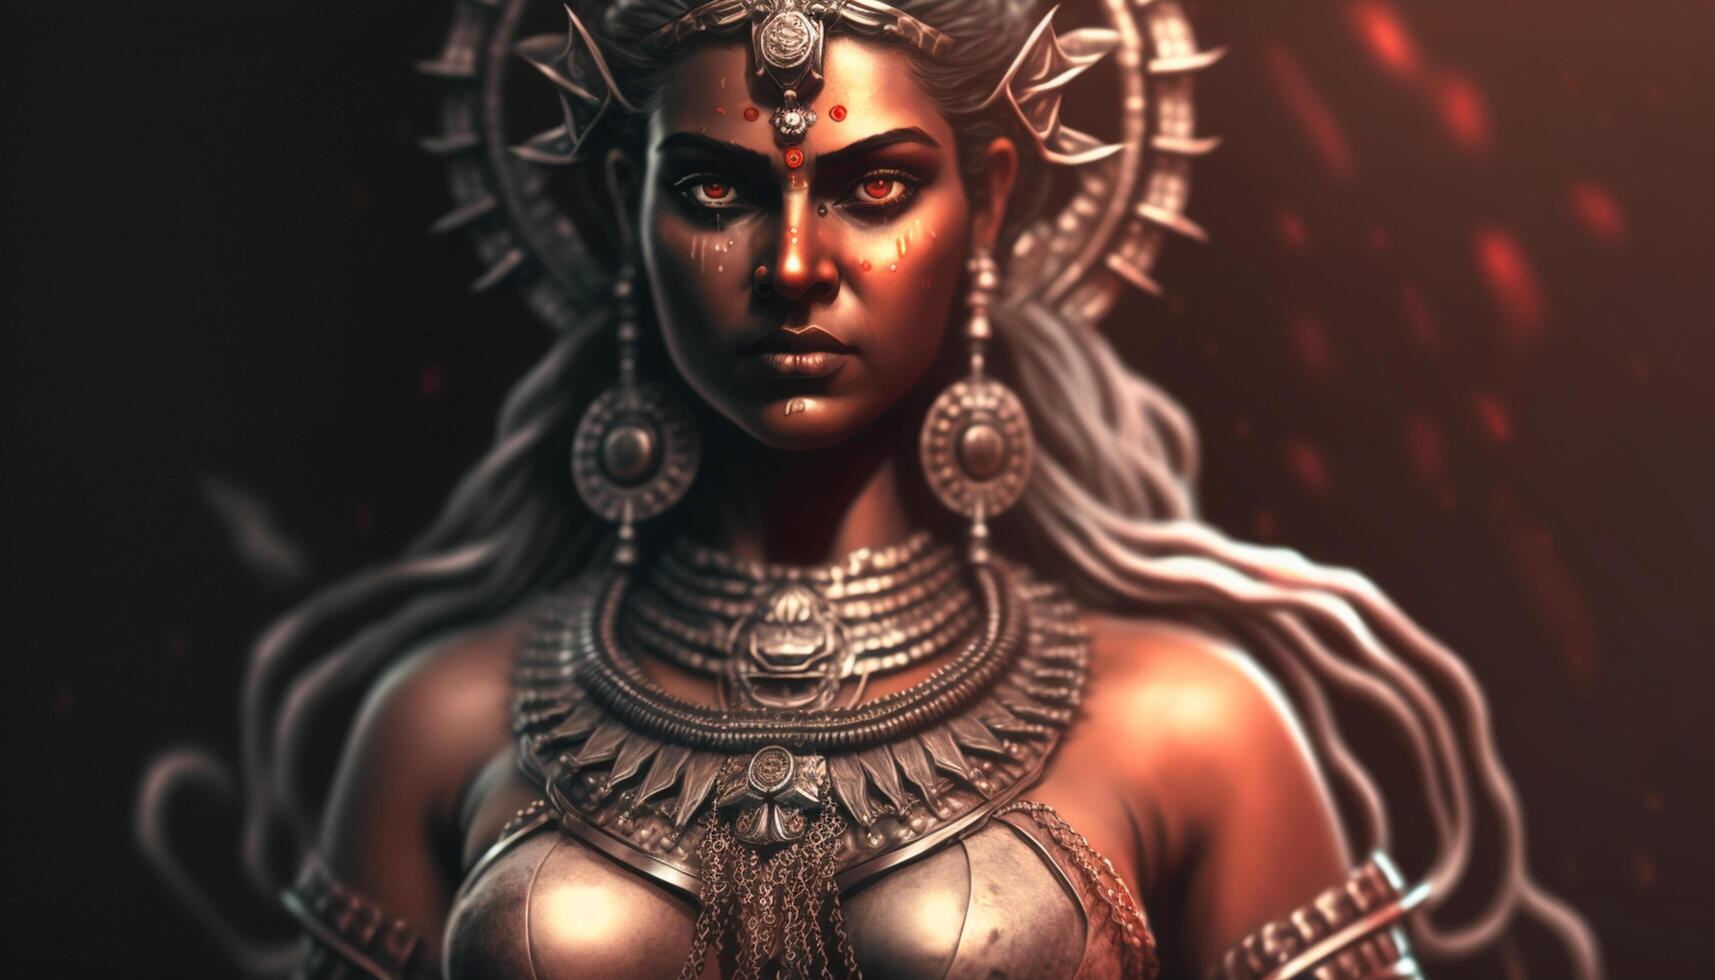 Divine Warrior A Portrait of Durga, the Hindu Goddess of War in Sculpture photo